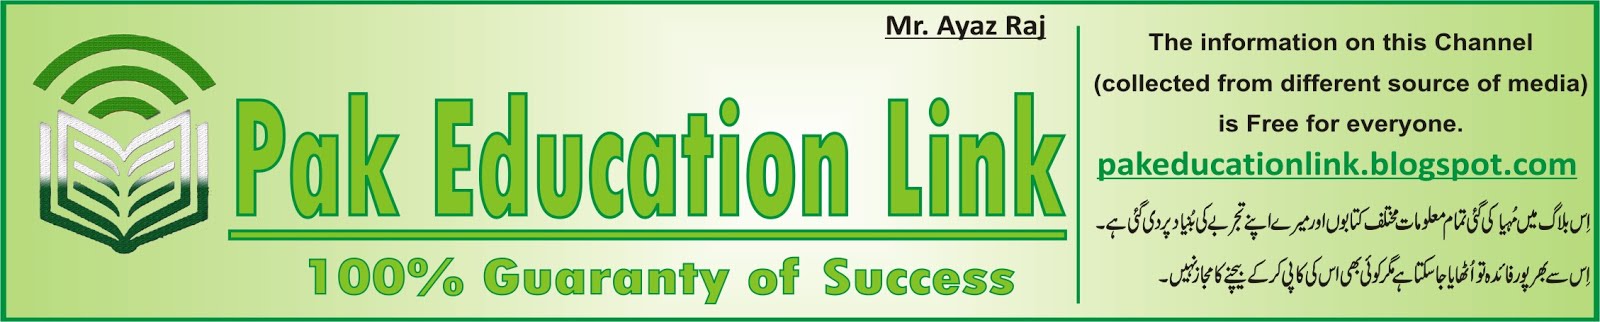 Pak Education Link